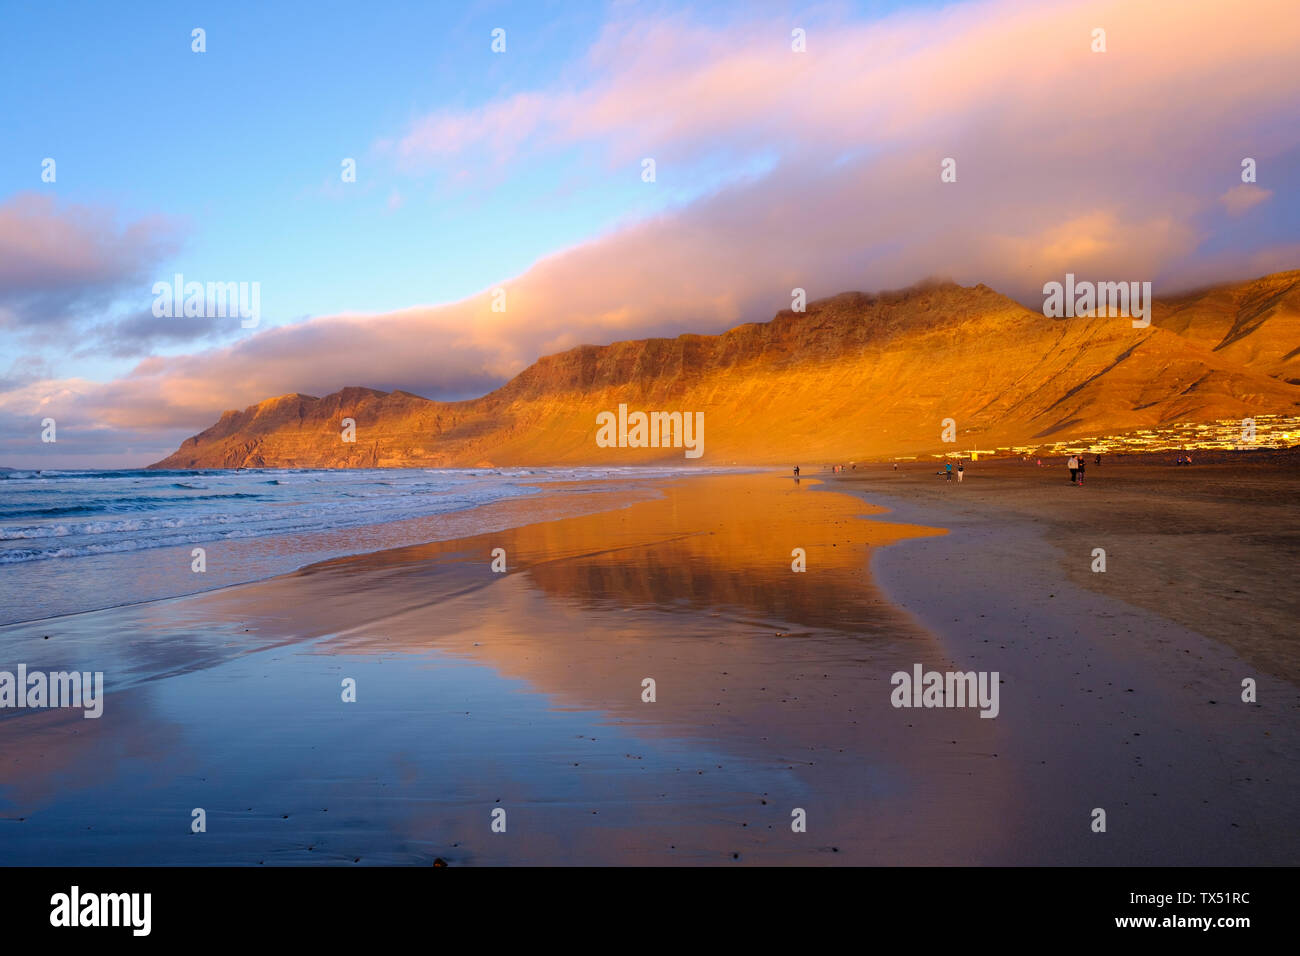 Spain, Canary Islands, Lanzarote, Caleta de Famara, beach in the evening light Stock Photo